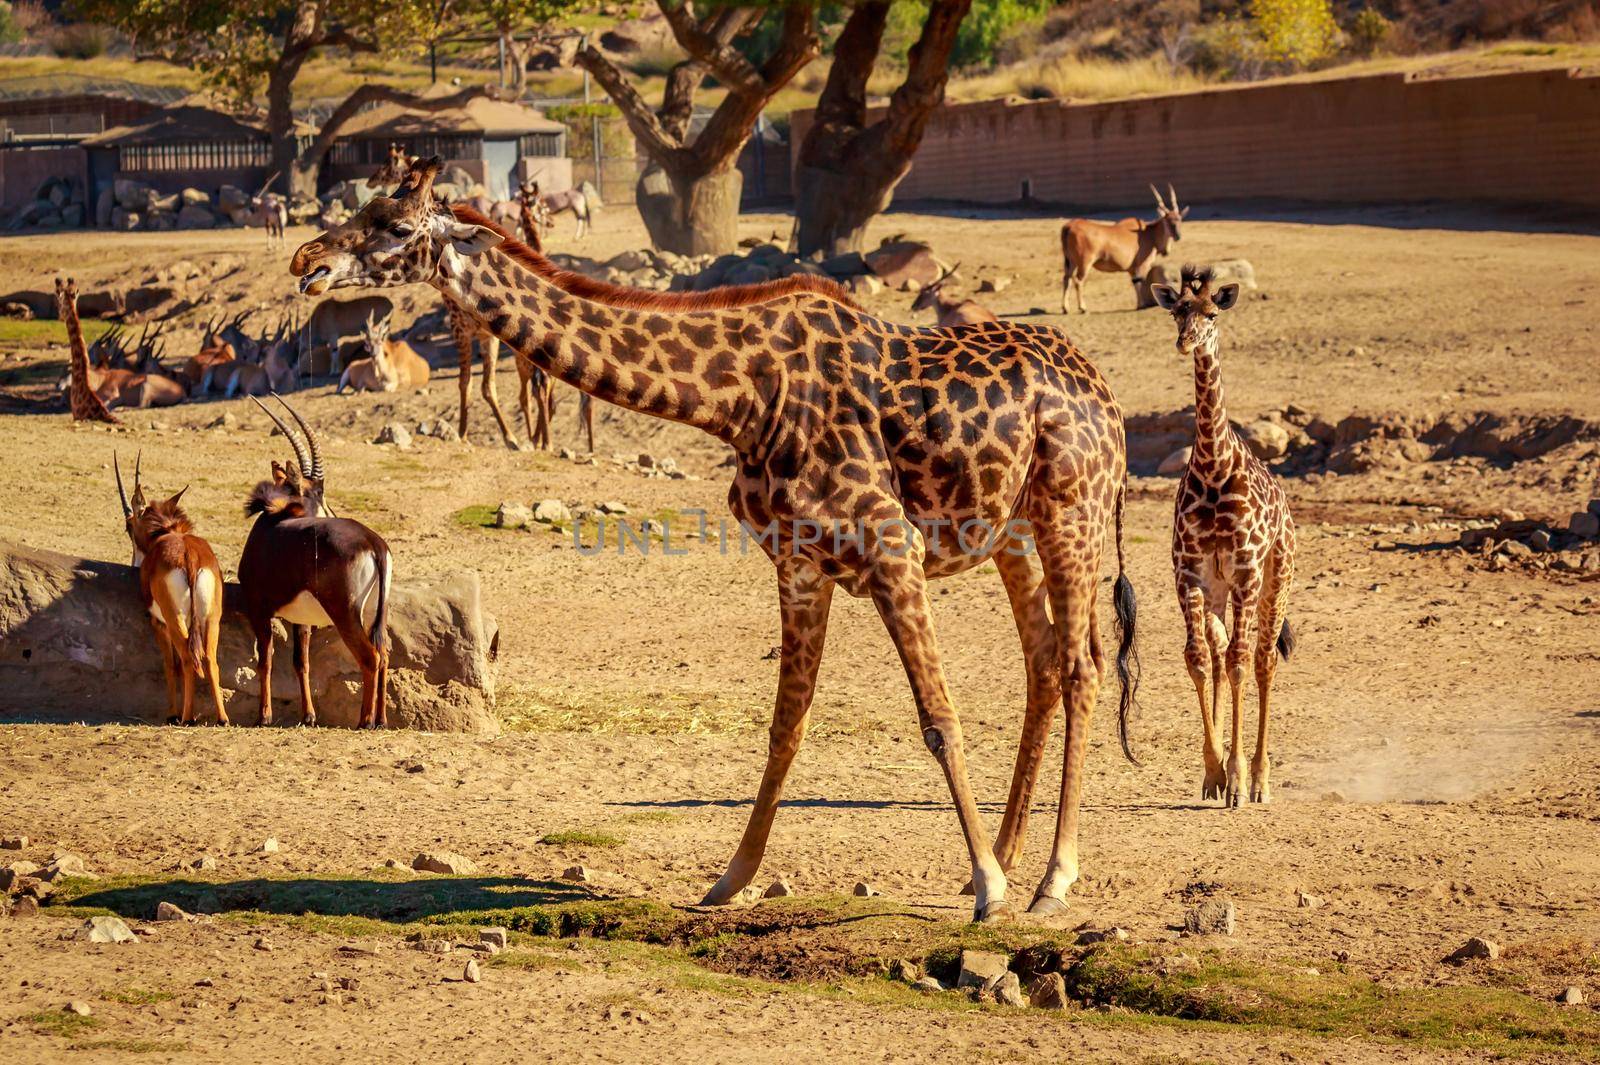 Baby giraffe accompanie by it mother